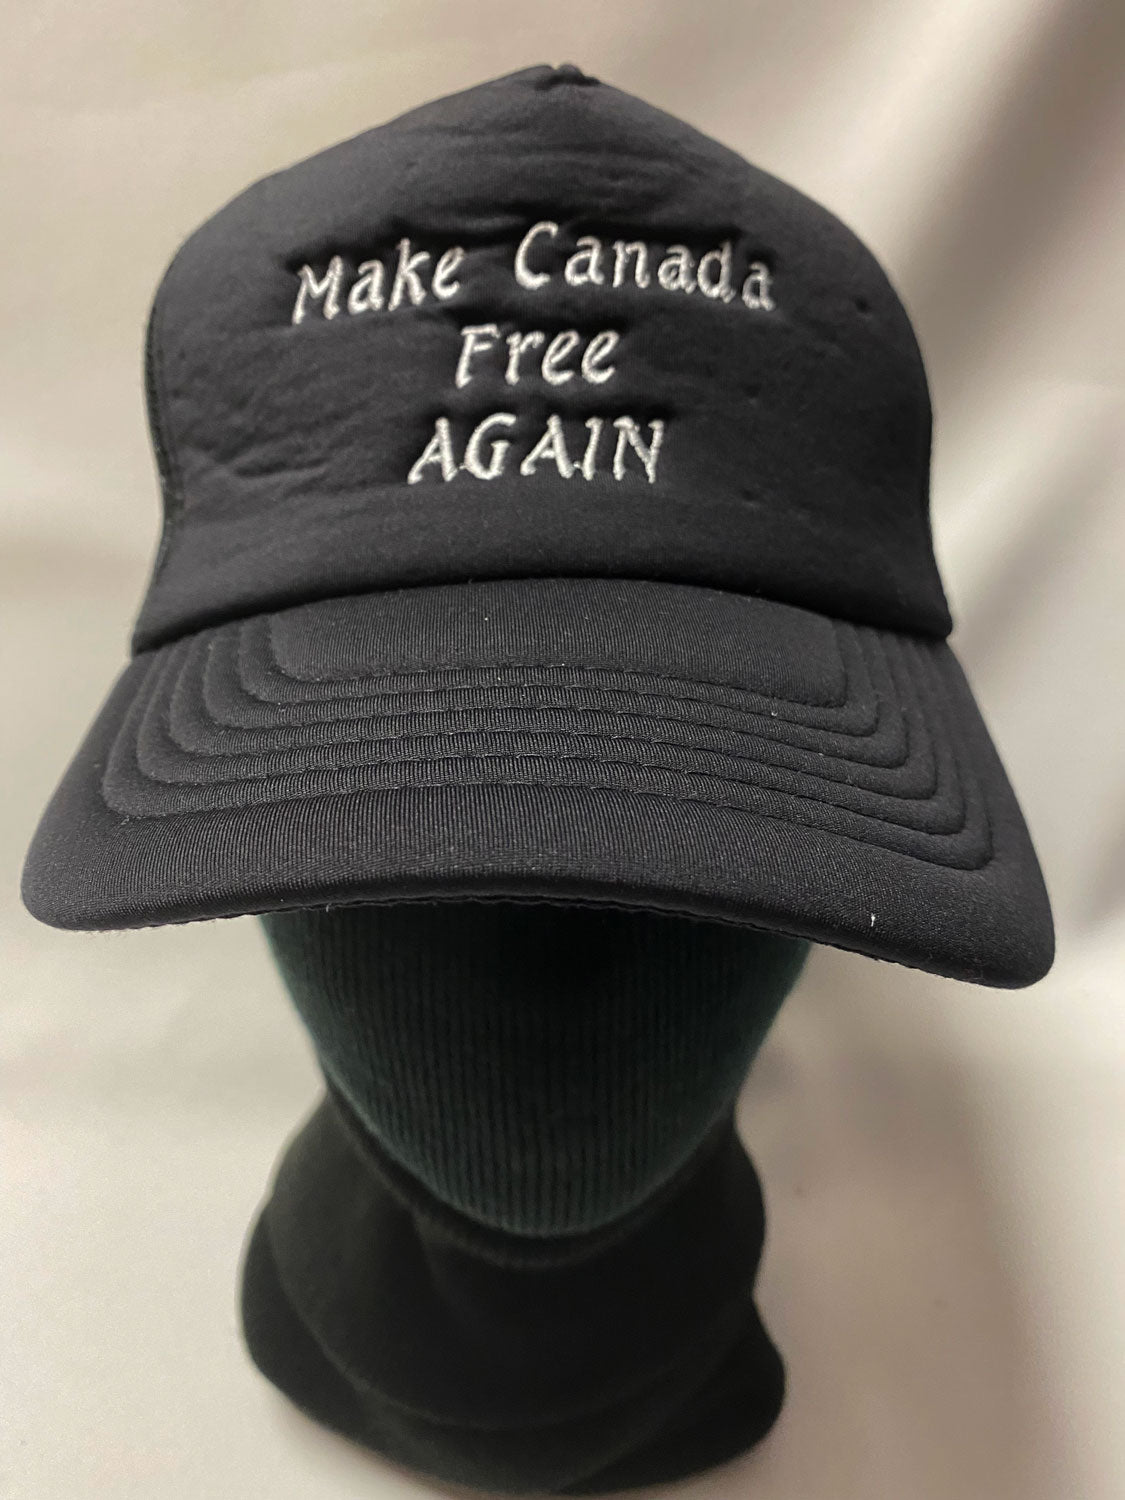 BALL CAP "MAKE CANADA FREE AGAIN" 2022 - white embroidery on black